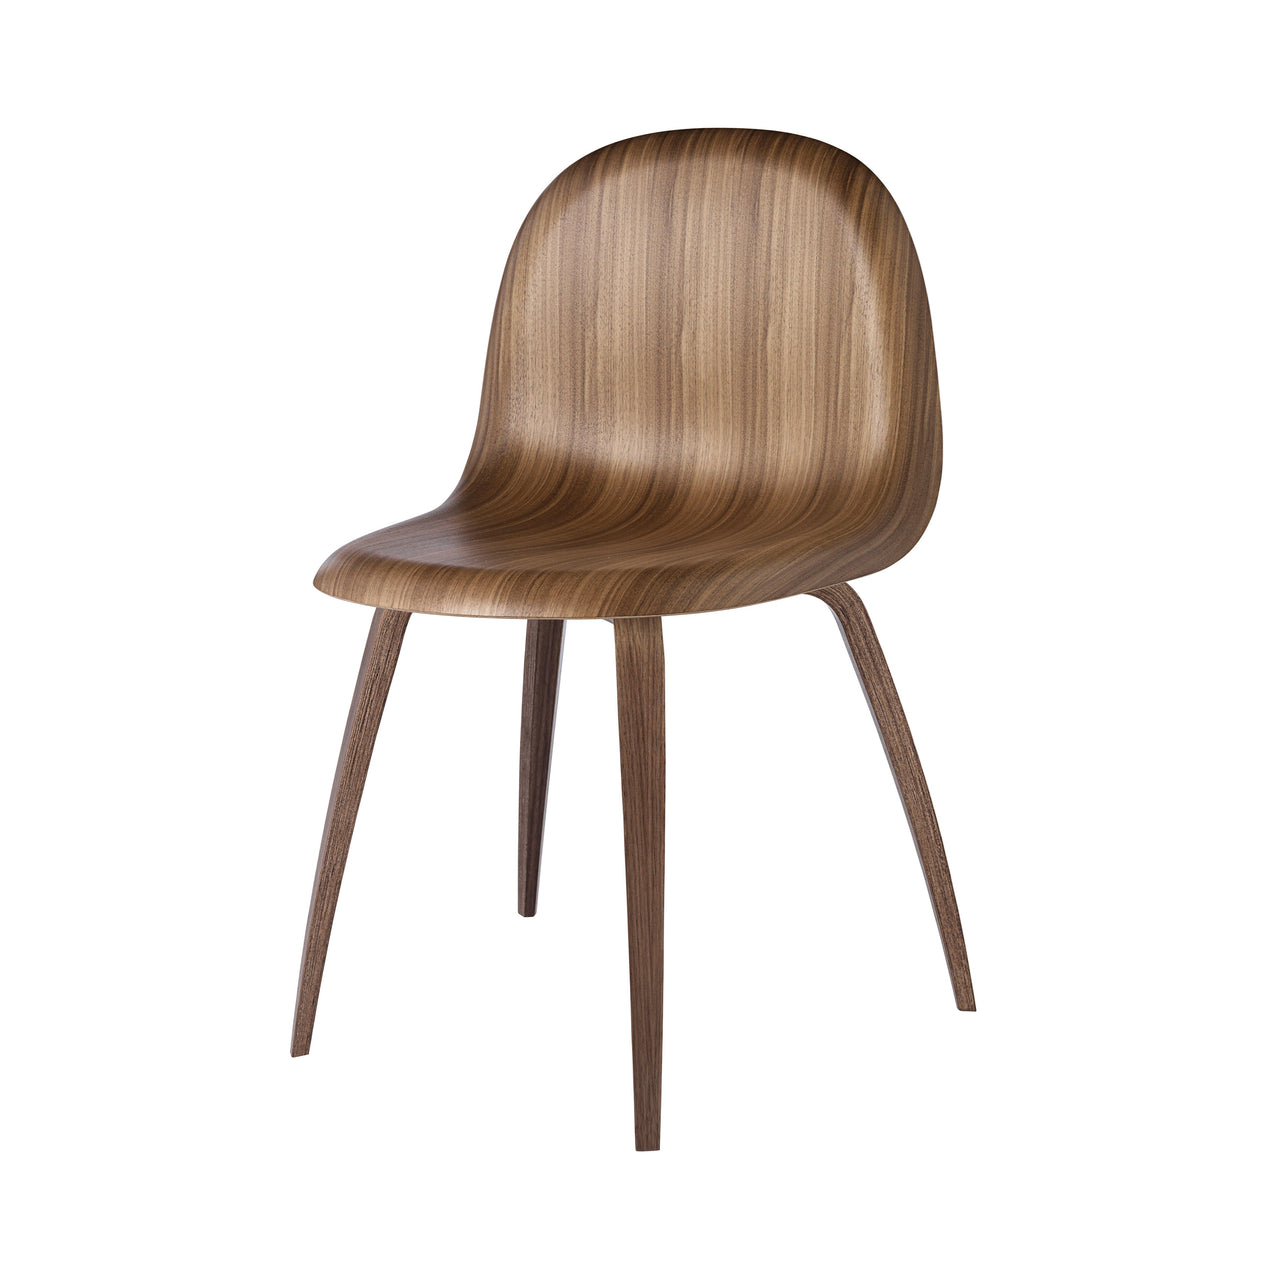 3D Dining Chair: Wood Base + American Walnut